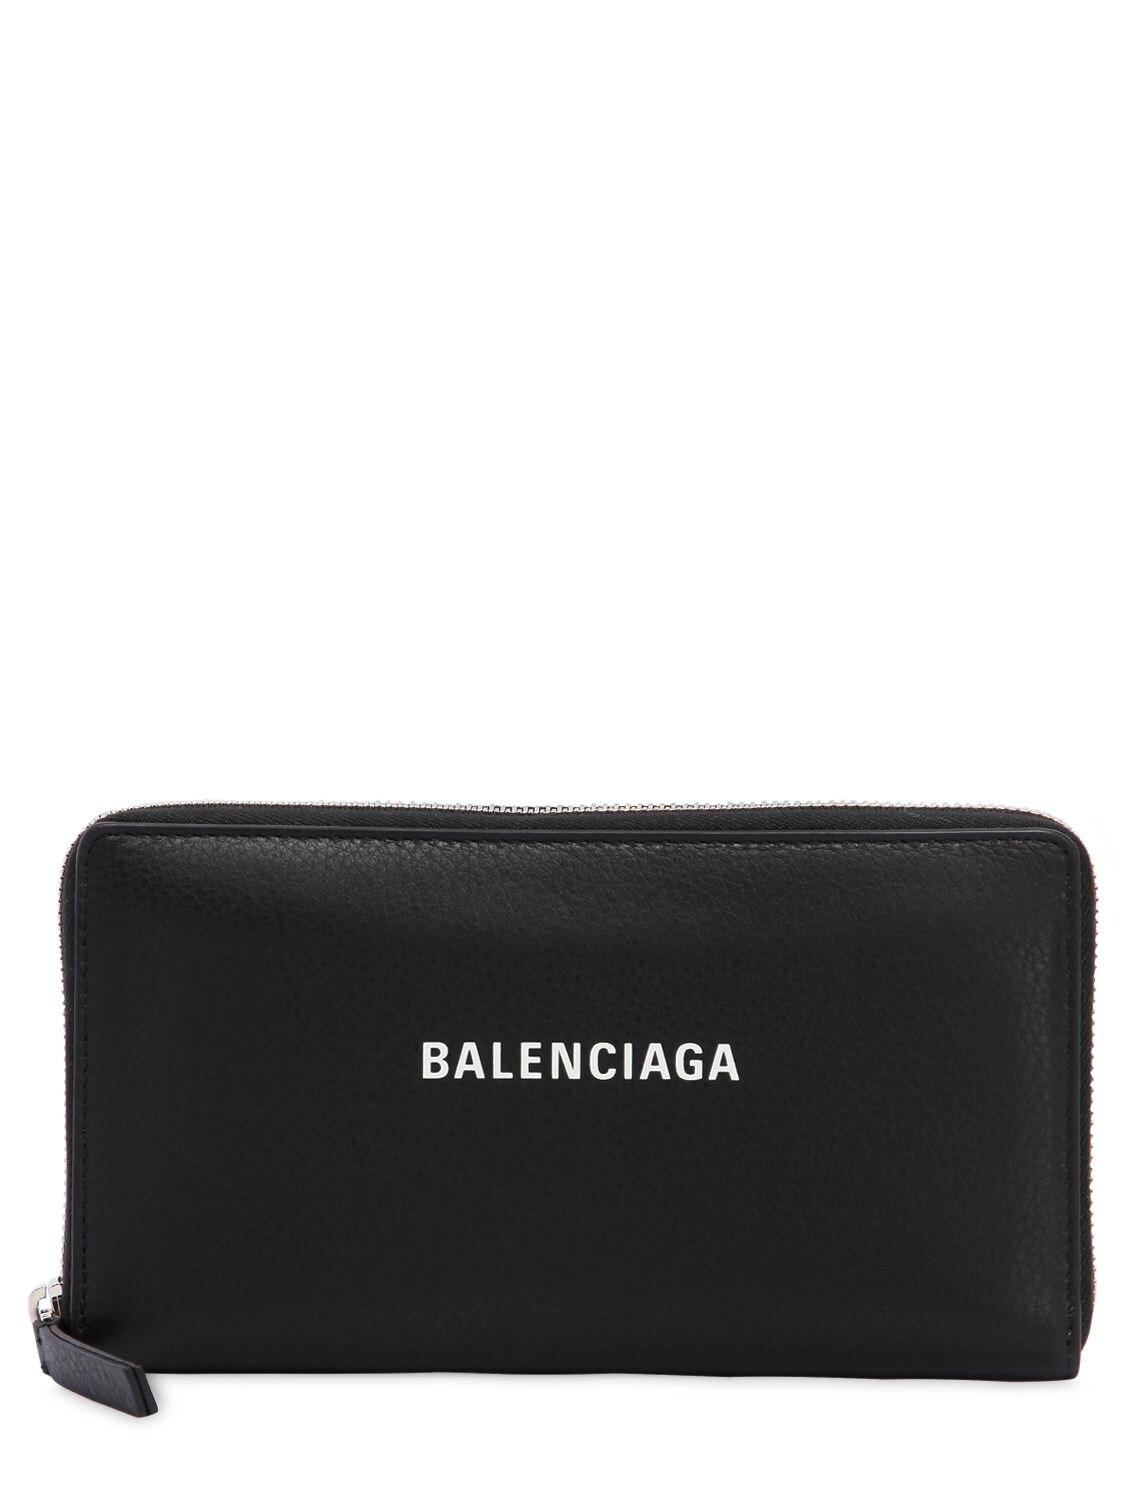 Balenciaga Zip Round Leather Wallet in Black - Save 28% - Lyst